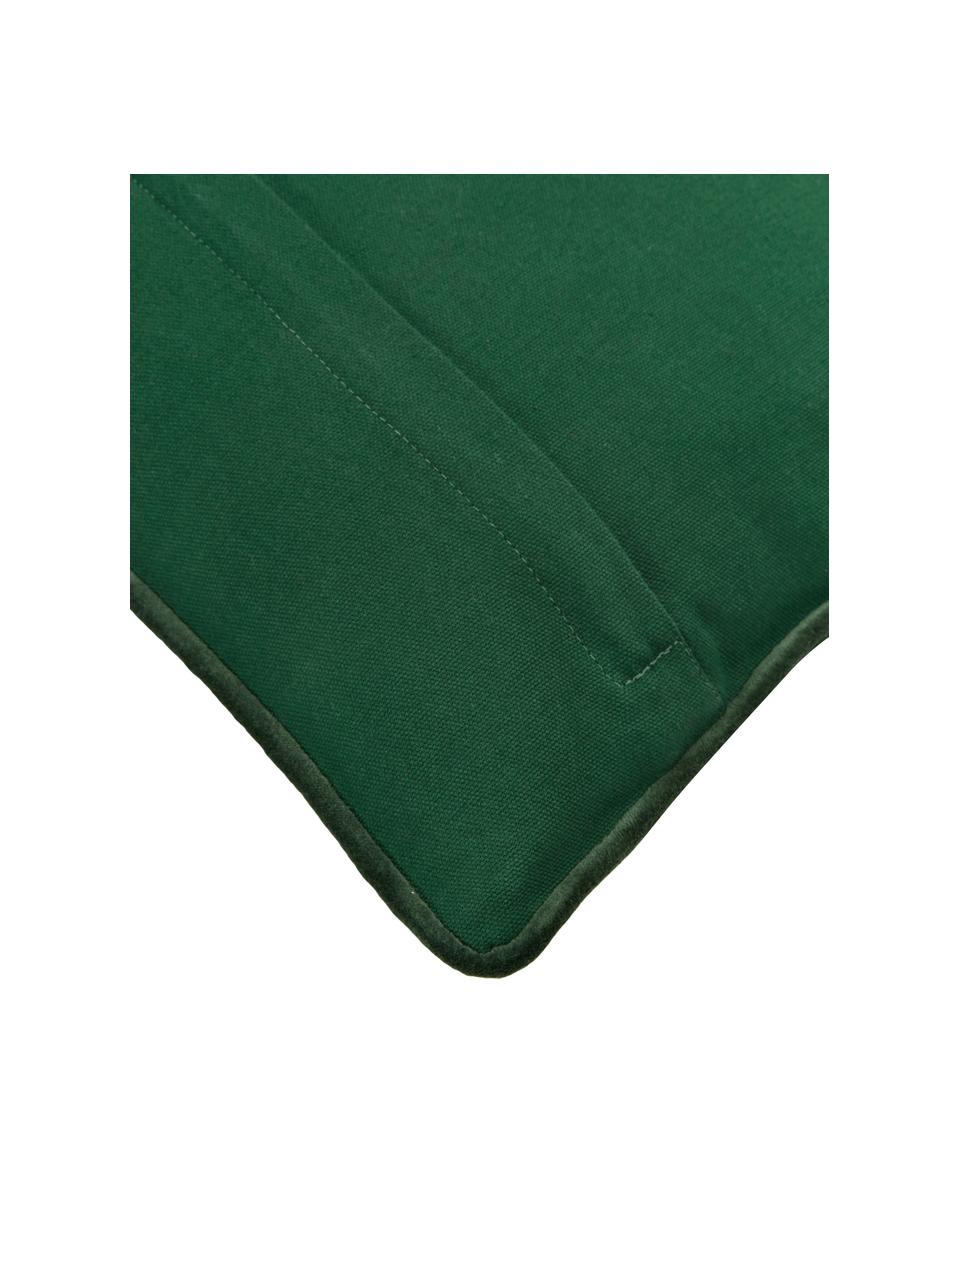 Federa arredo ricamata in velluto con bordino Holly Jolly, Velluto (100% cotone), Verde, Larg. 30 x Lung. 50 cm